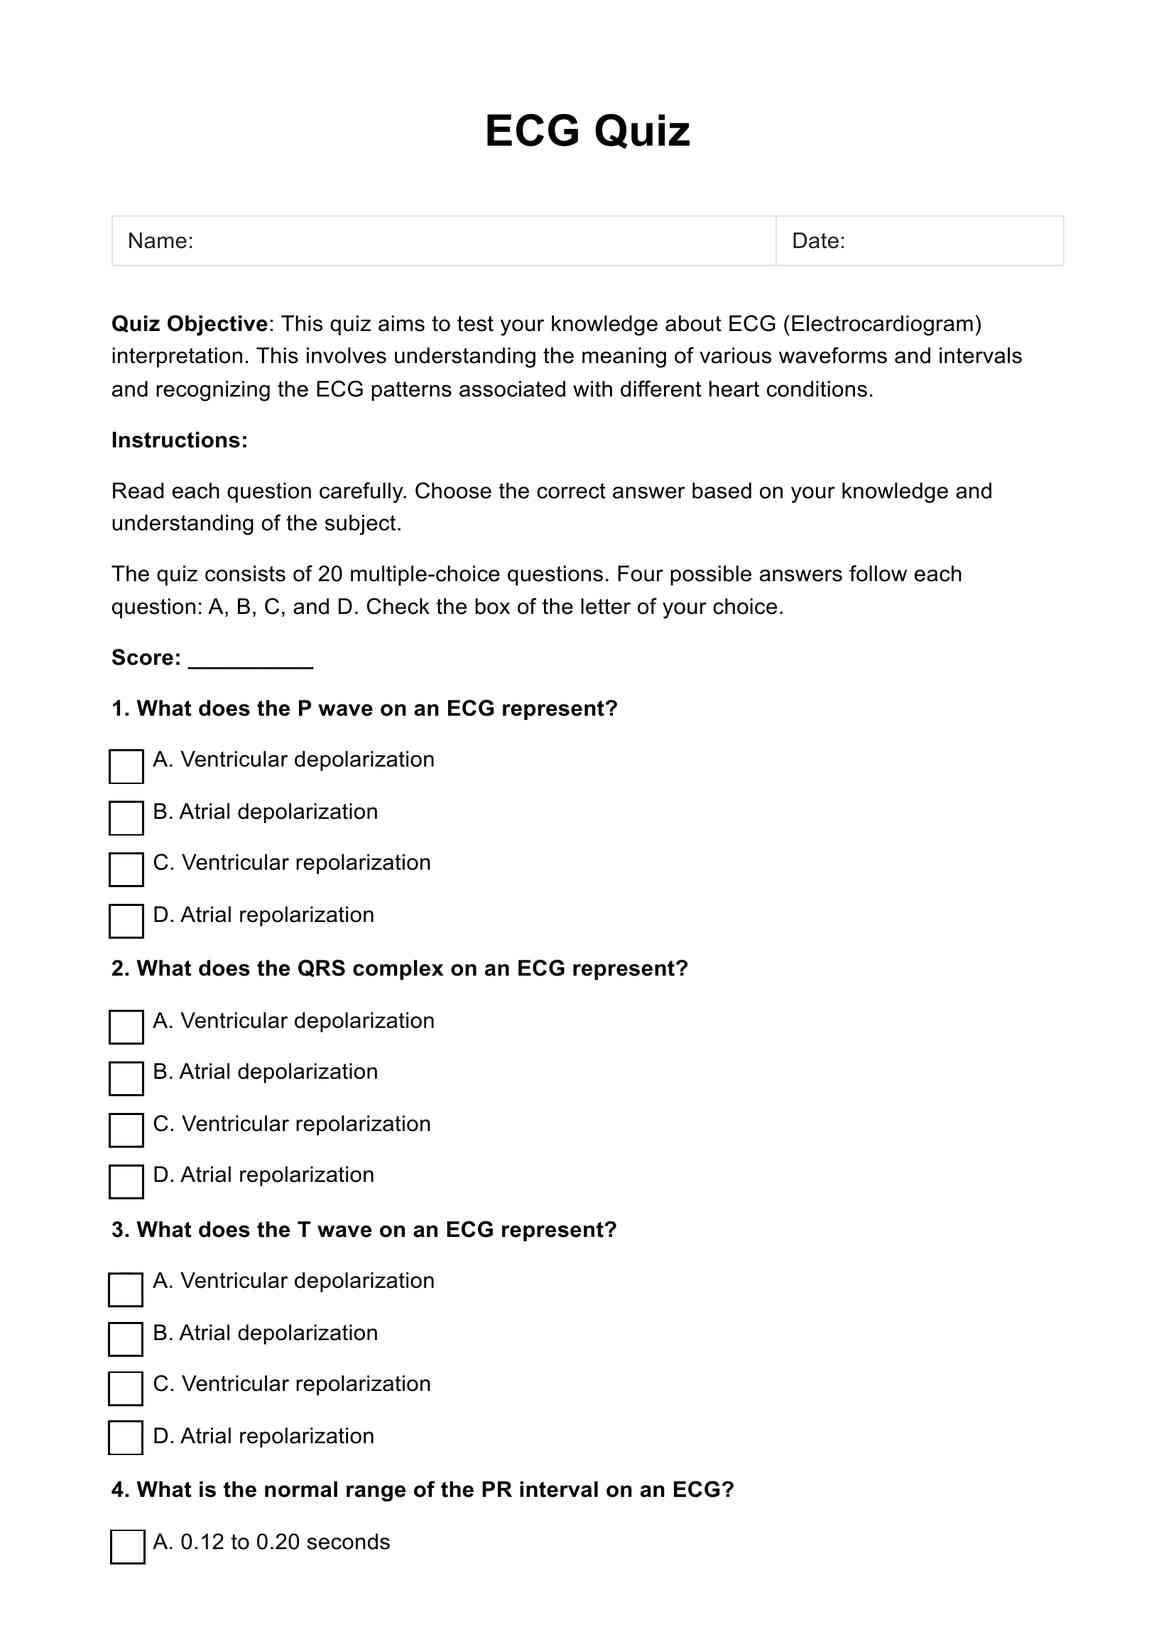 ECG Quiz PDF Example